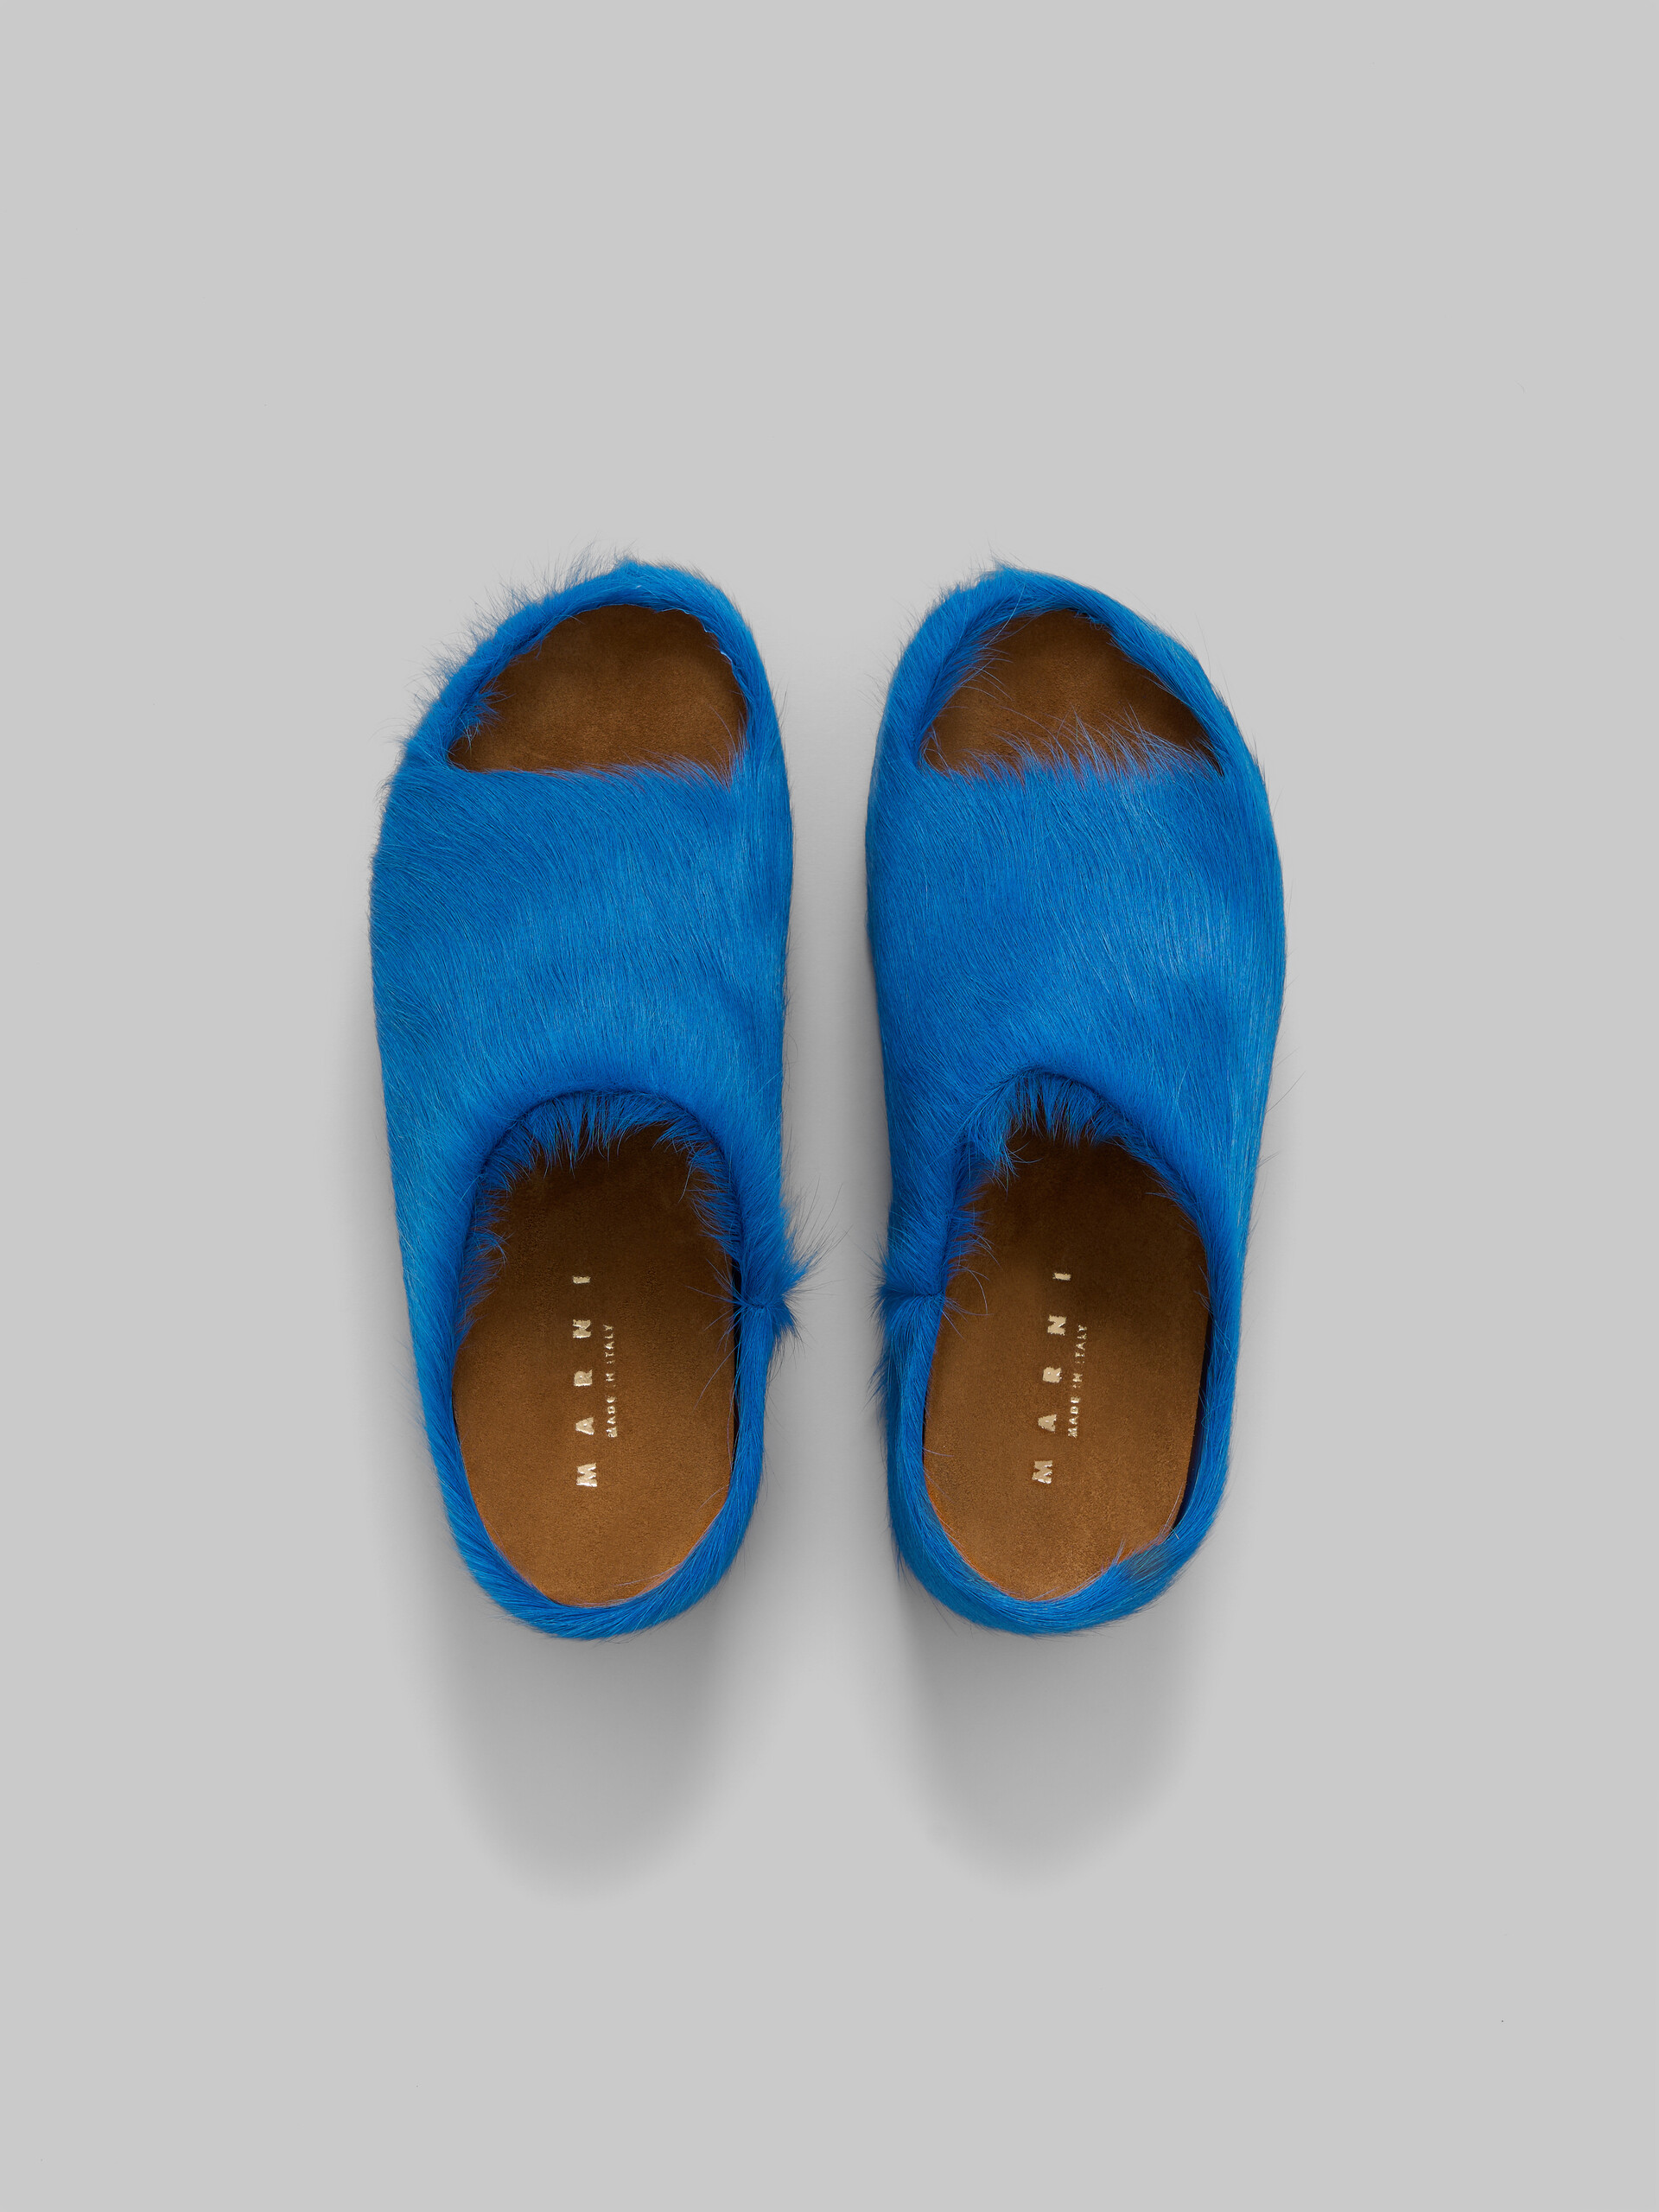 Chancla tipo zueco gruesa azul de piel de becerro de pelo largo - Sandalias - Image 4